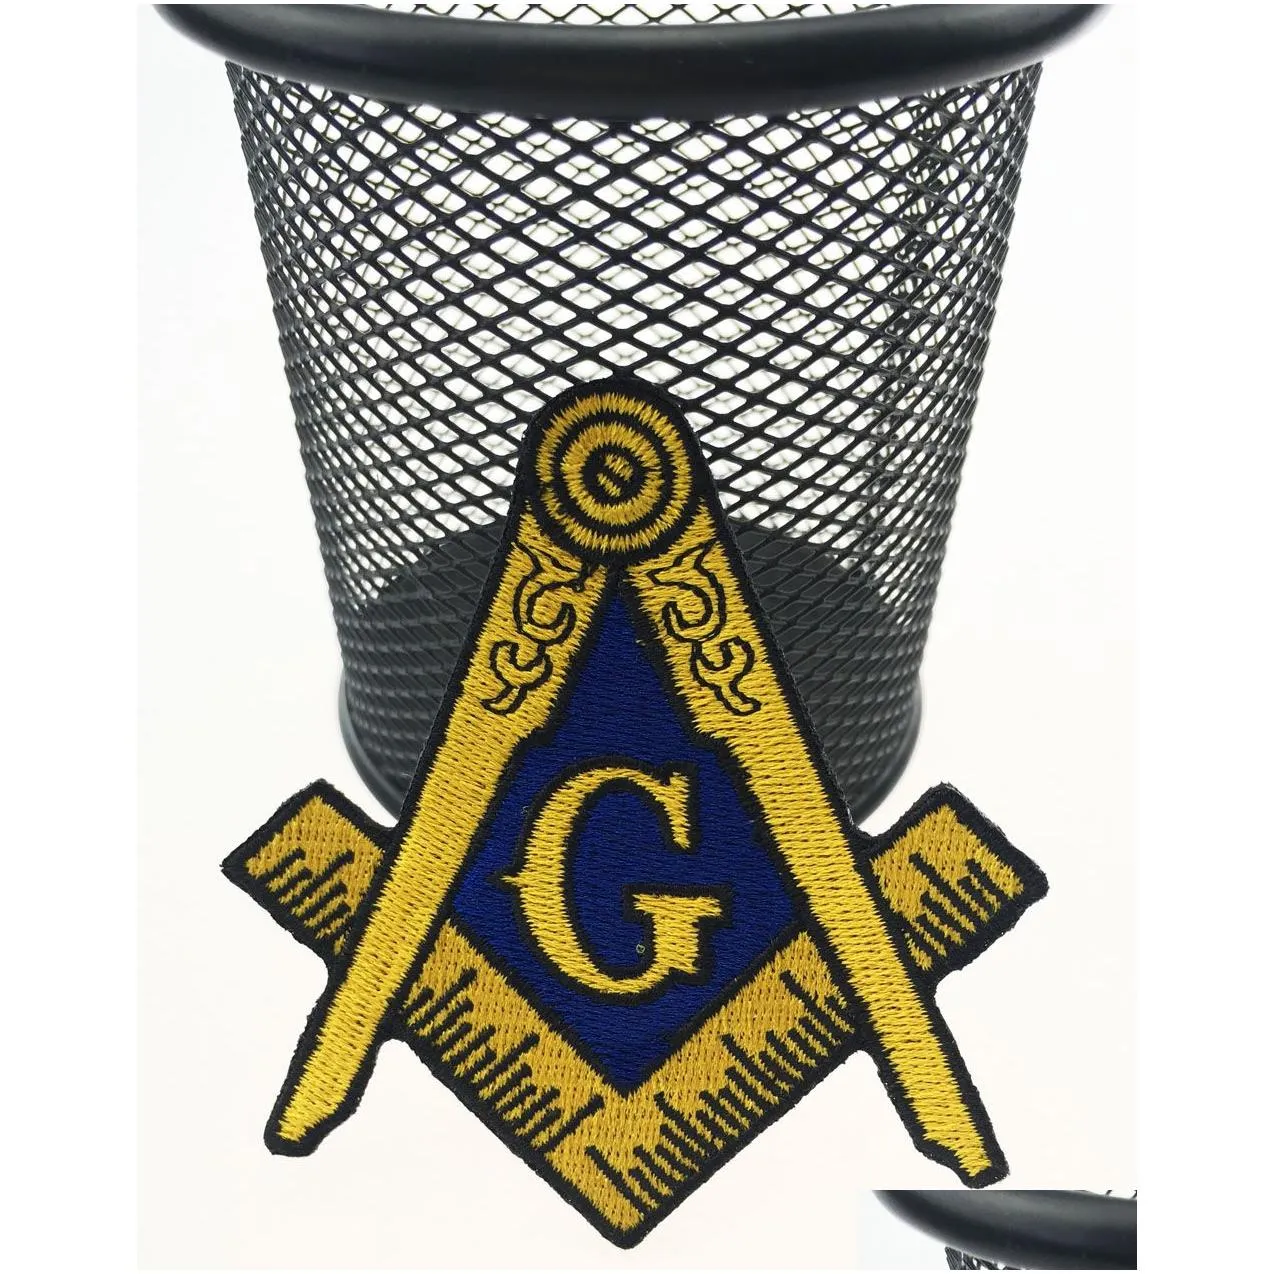  masonic logo embroidered ironon clothing mason lodge emblem mason g square compass sew on any garment